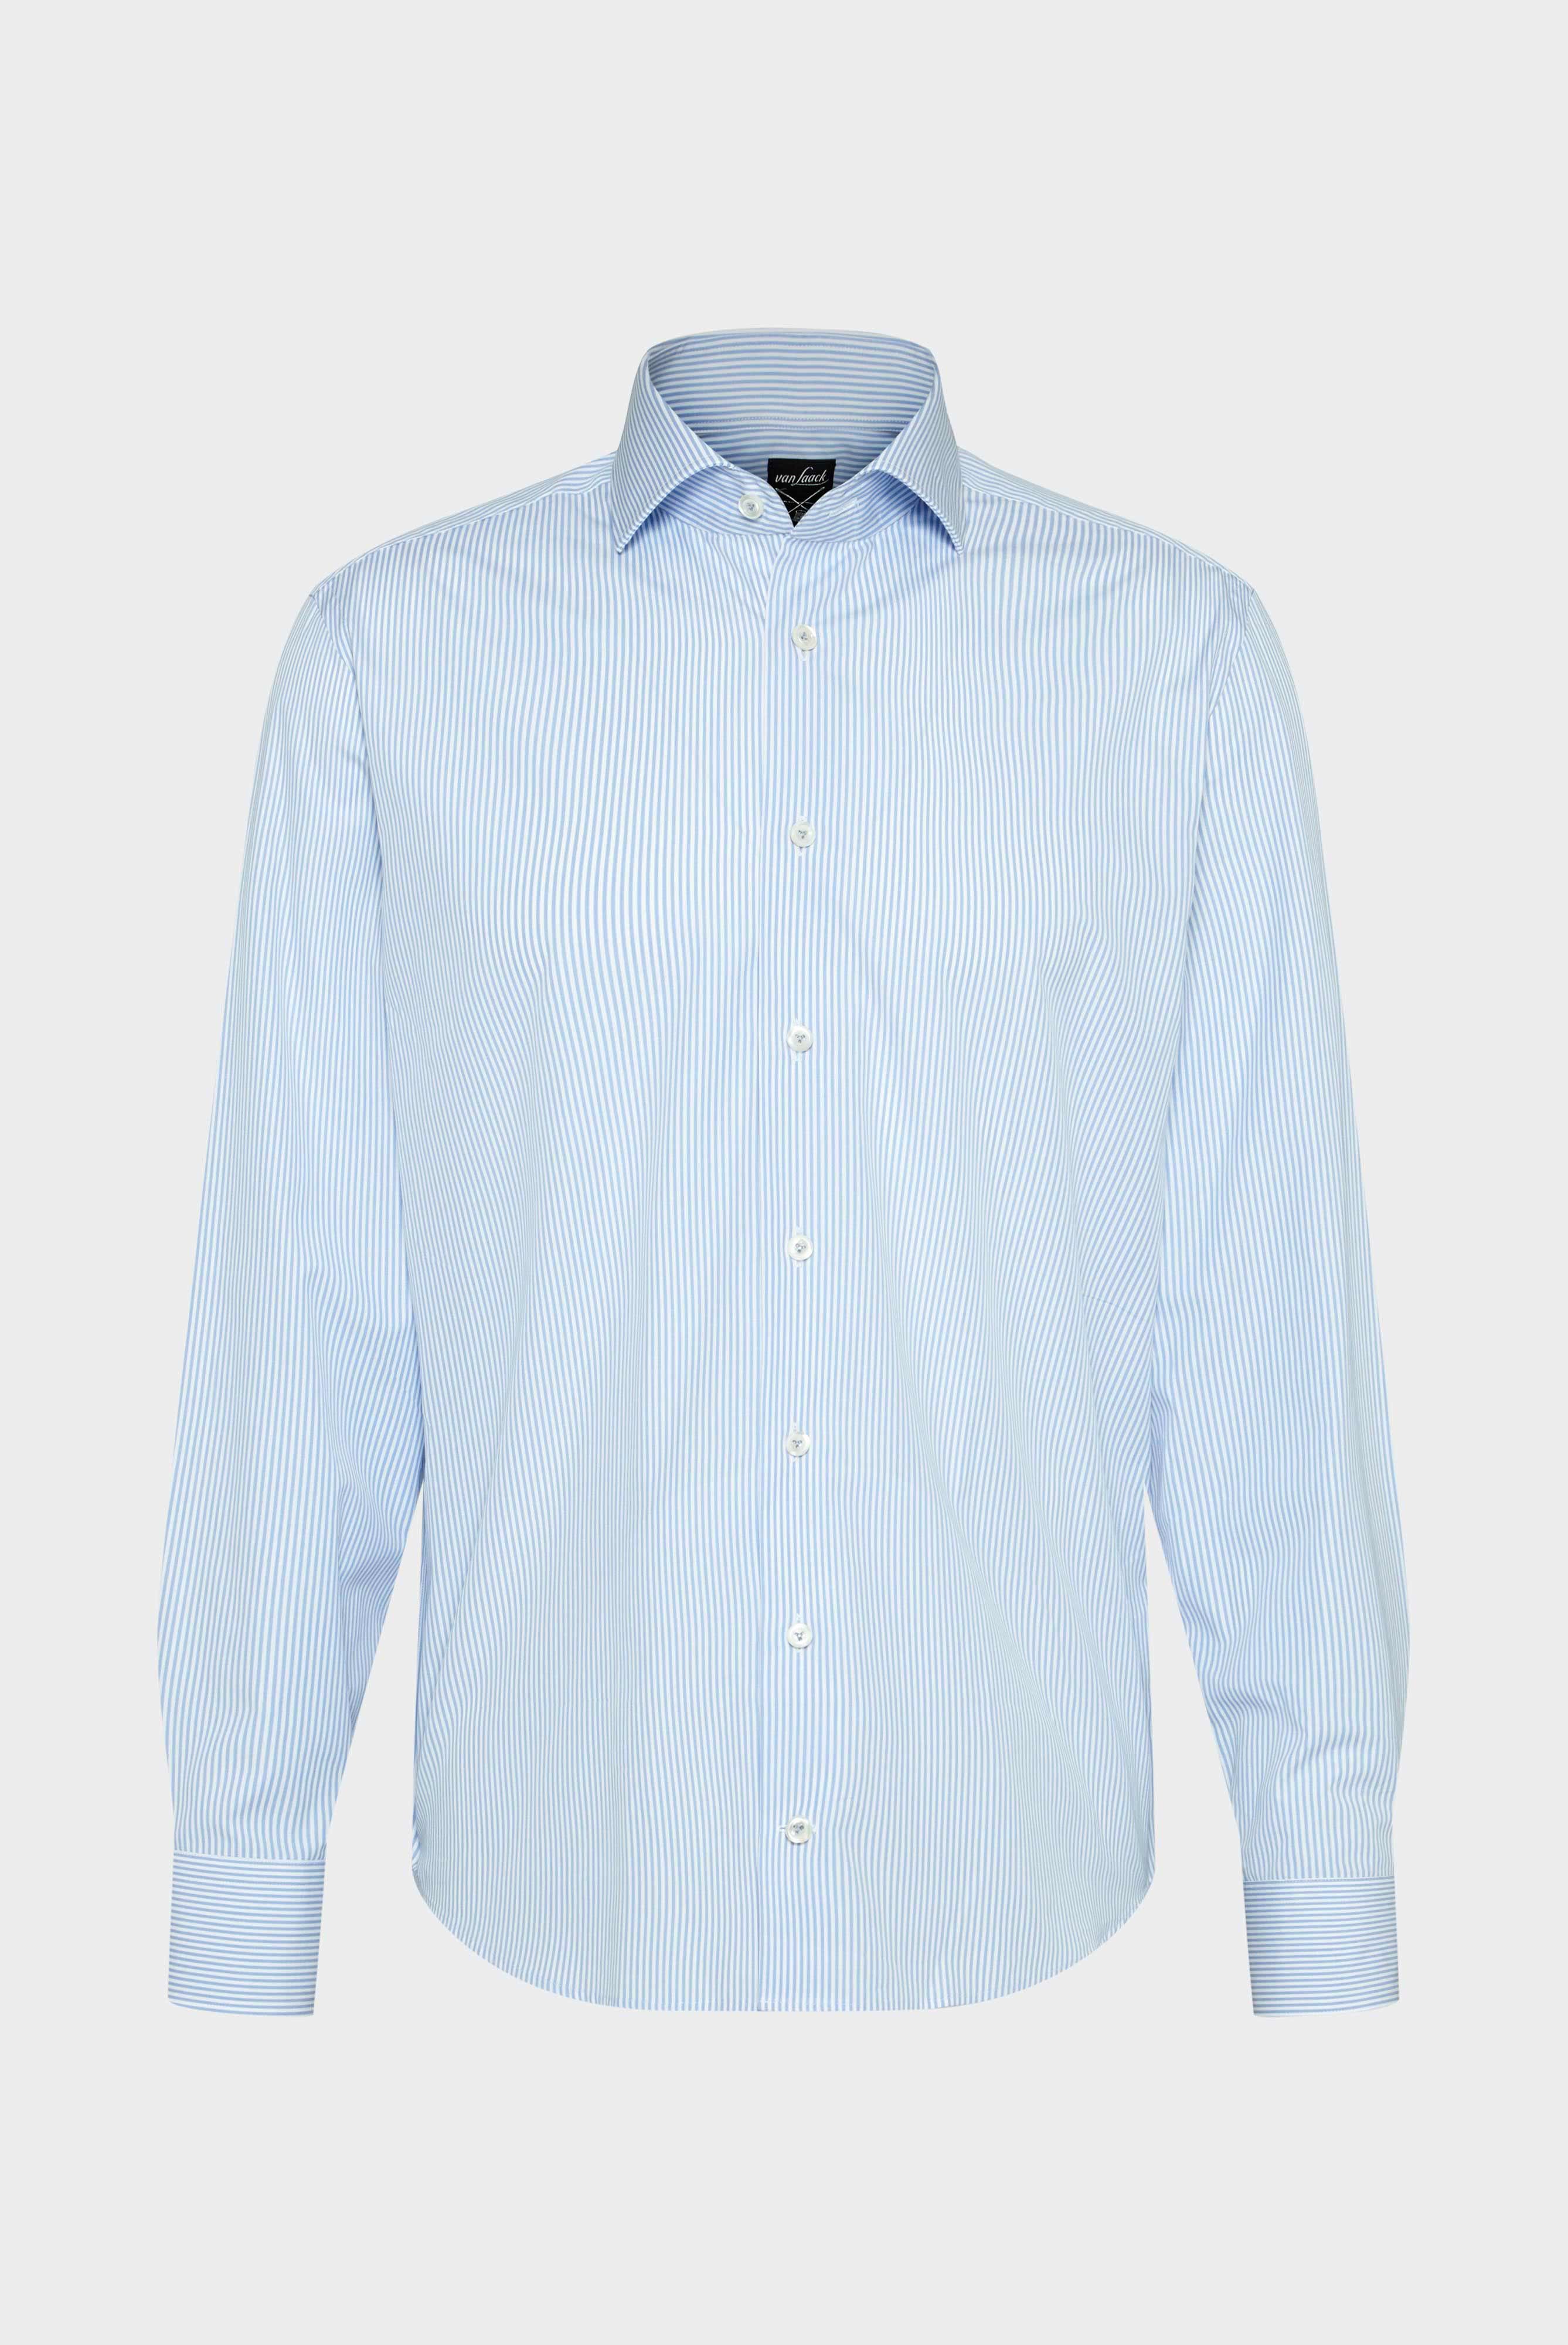 Bügelleichte Hemden+Bügelfreies Popeline Hemd Tailor Fit+20.2020.AV.141786.720.45